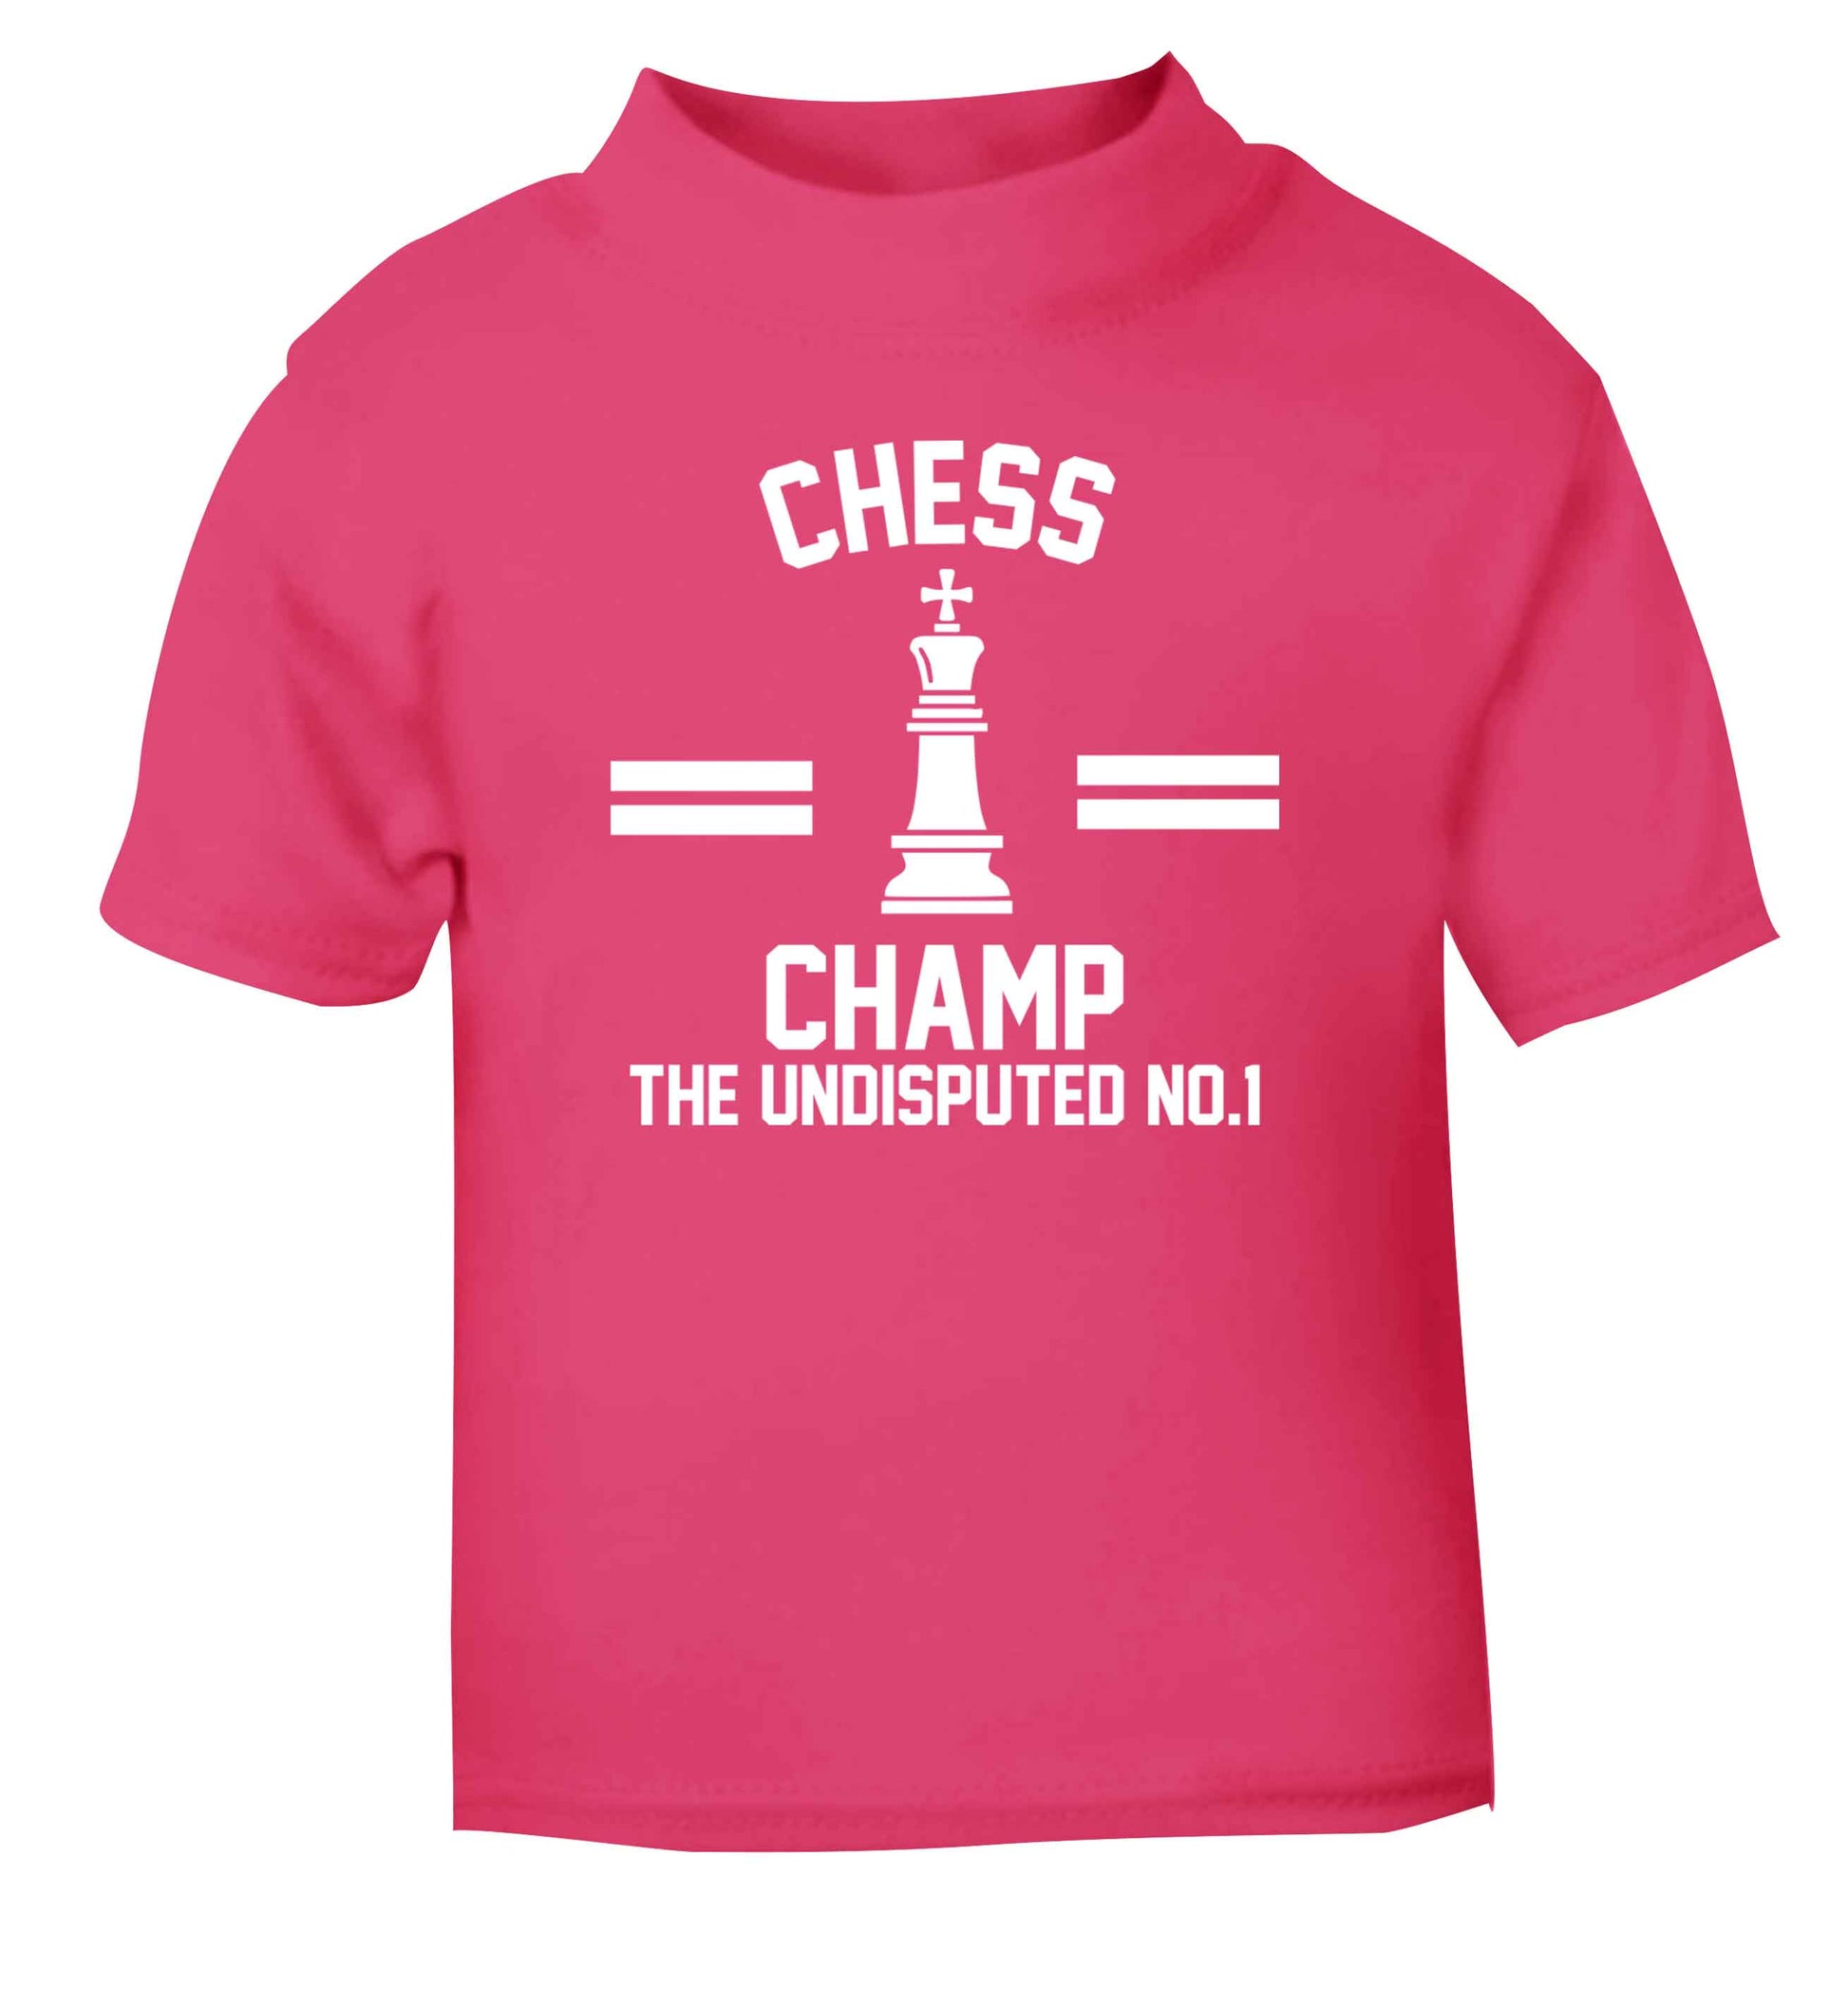 Undisputed chess championship no.1  pink Baby Toddler Tshirt 2 Years